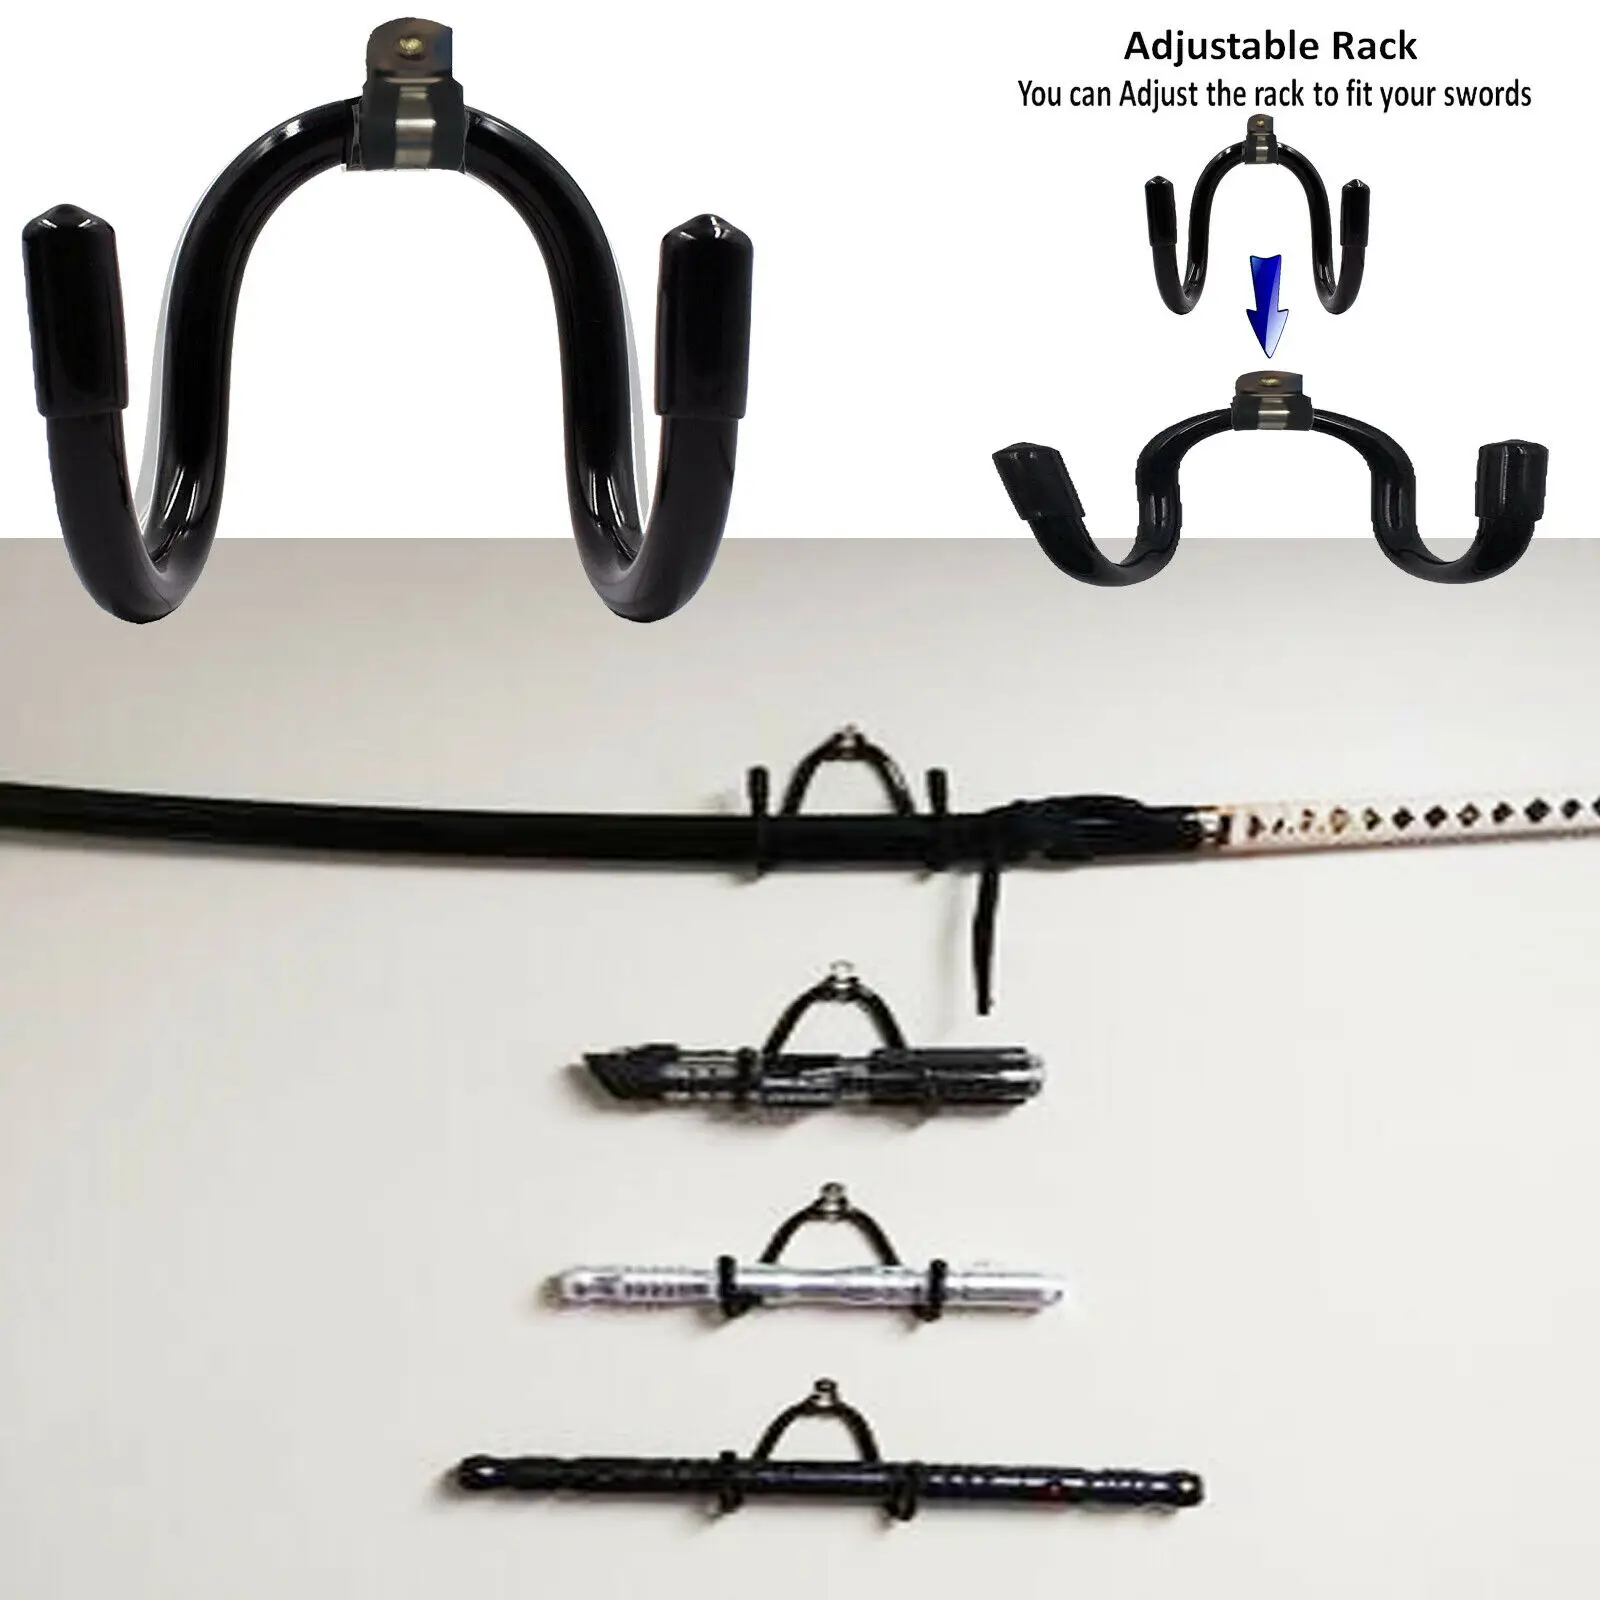 2x Flexible Wall Mount Stand Rack for Samurai Bushido Sword Display Universal 